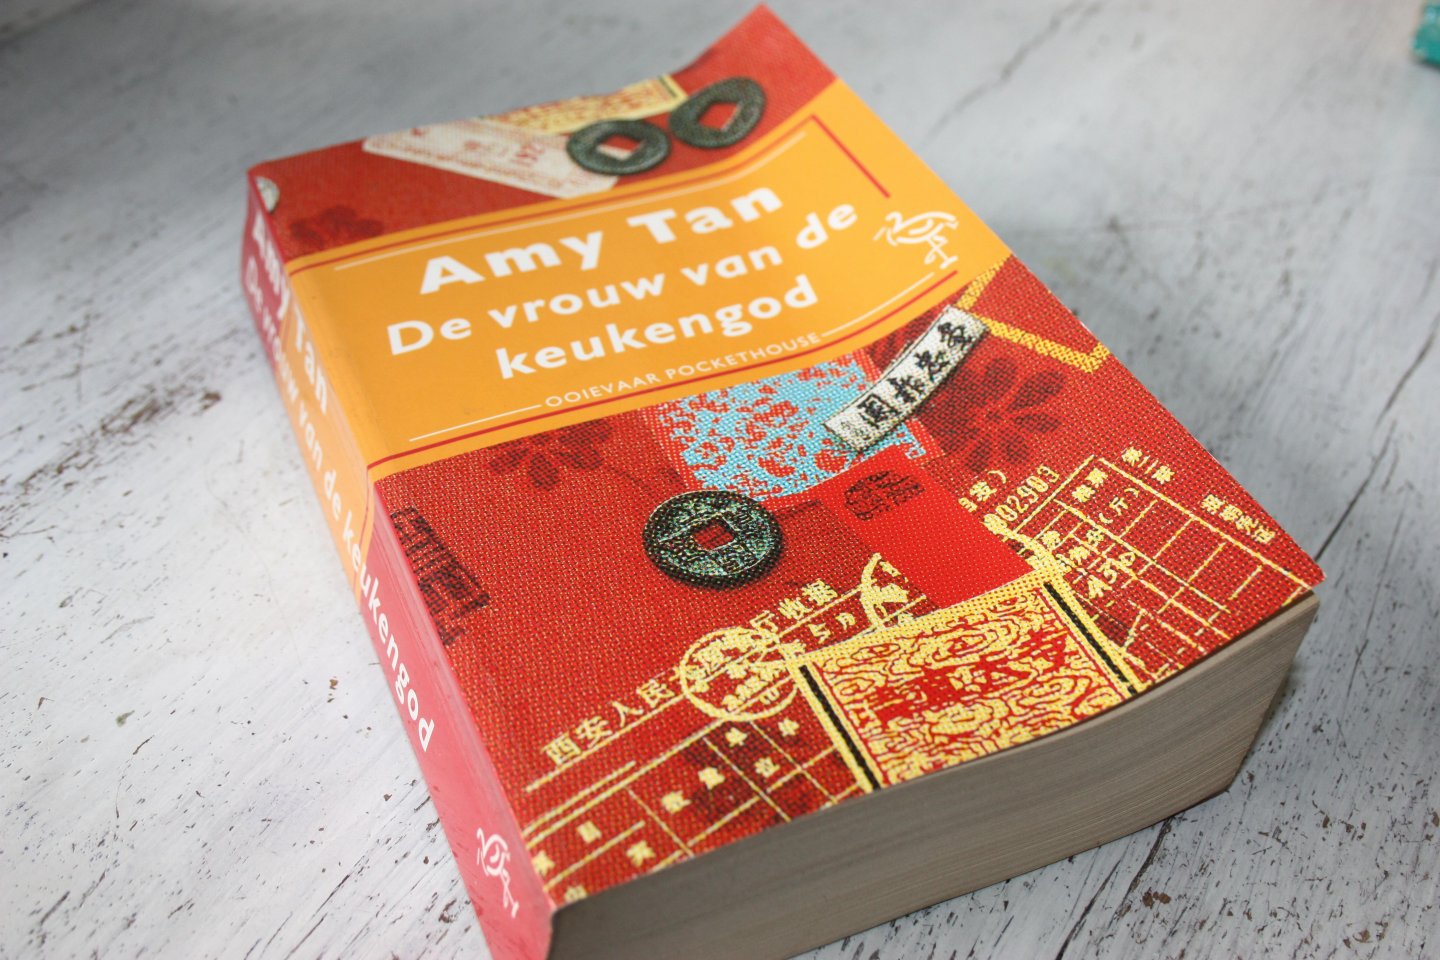 Tan, Amy - Amy Tan / De vrouw van de keukengod